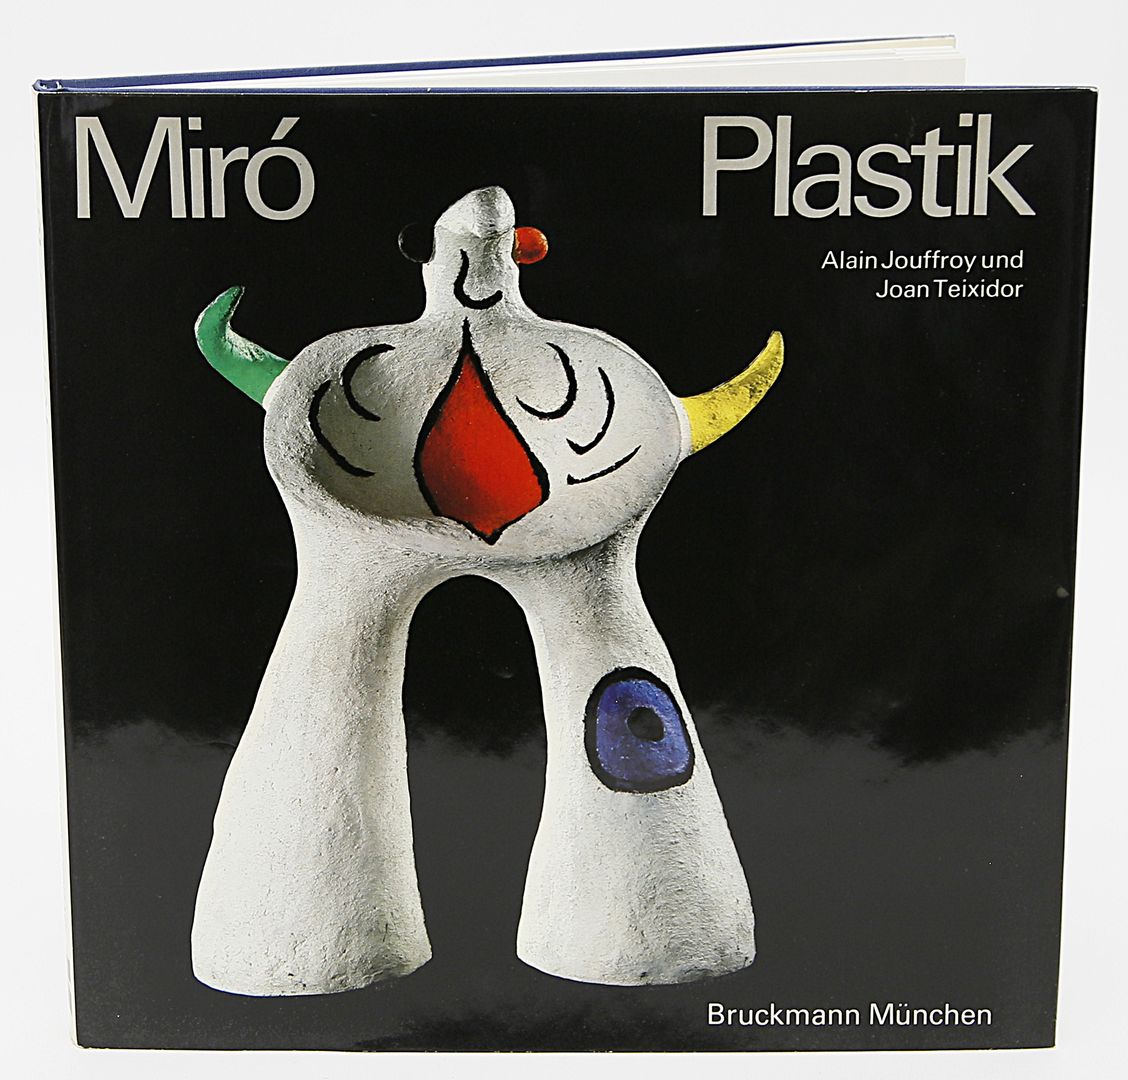 Buch "Miró Plastik".